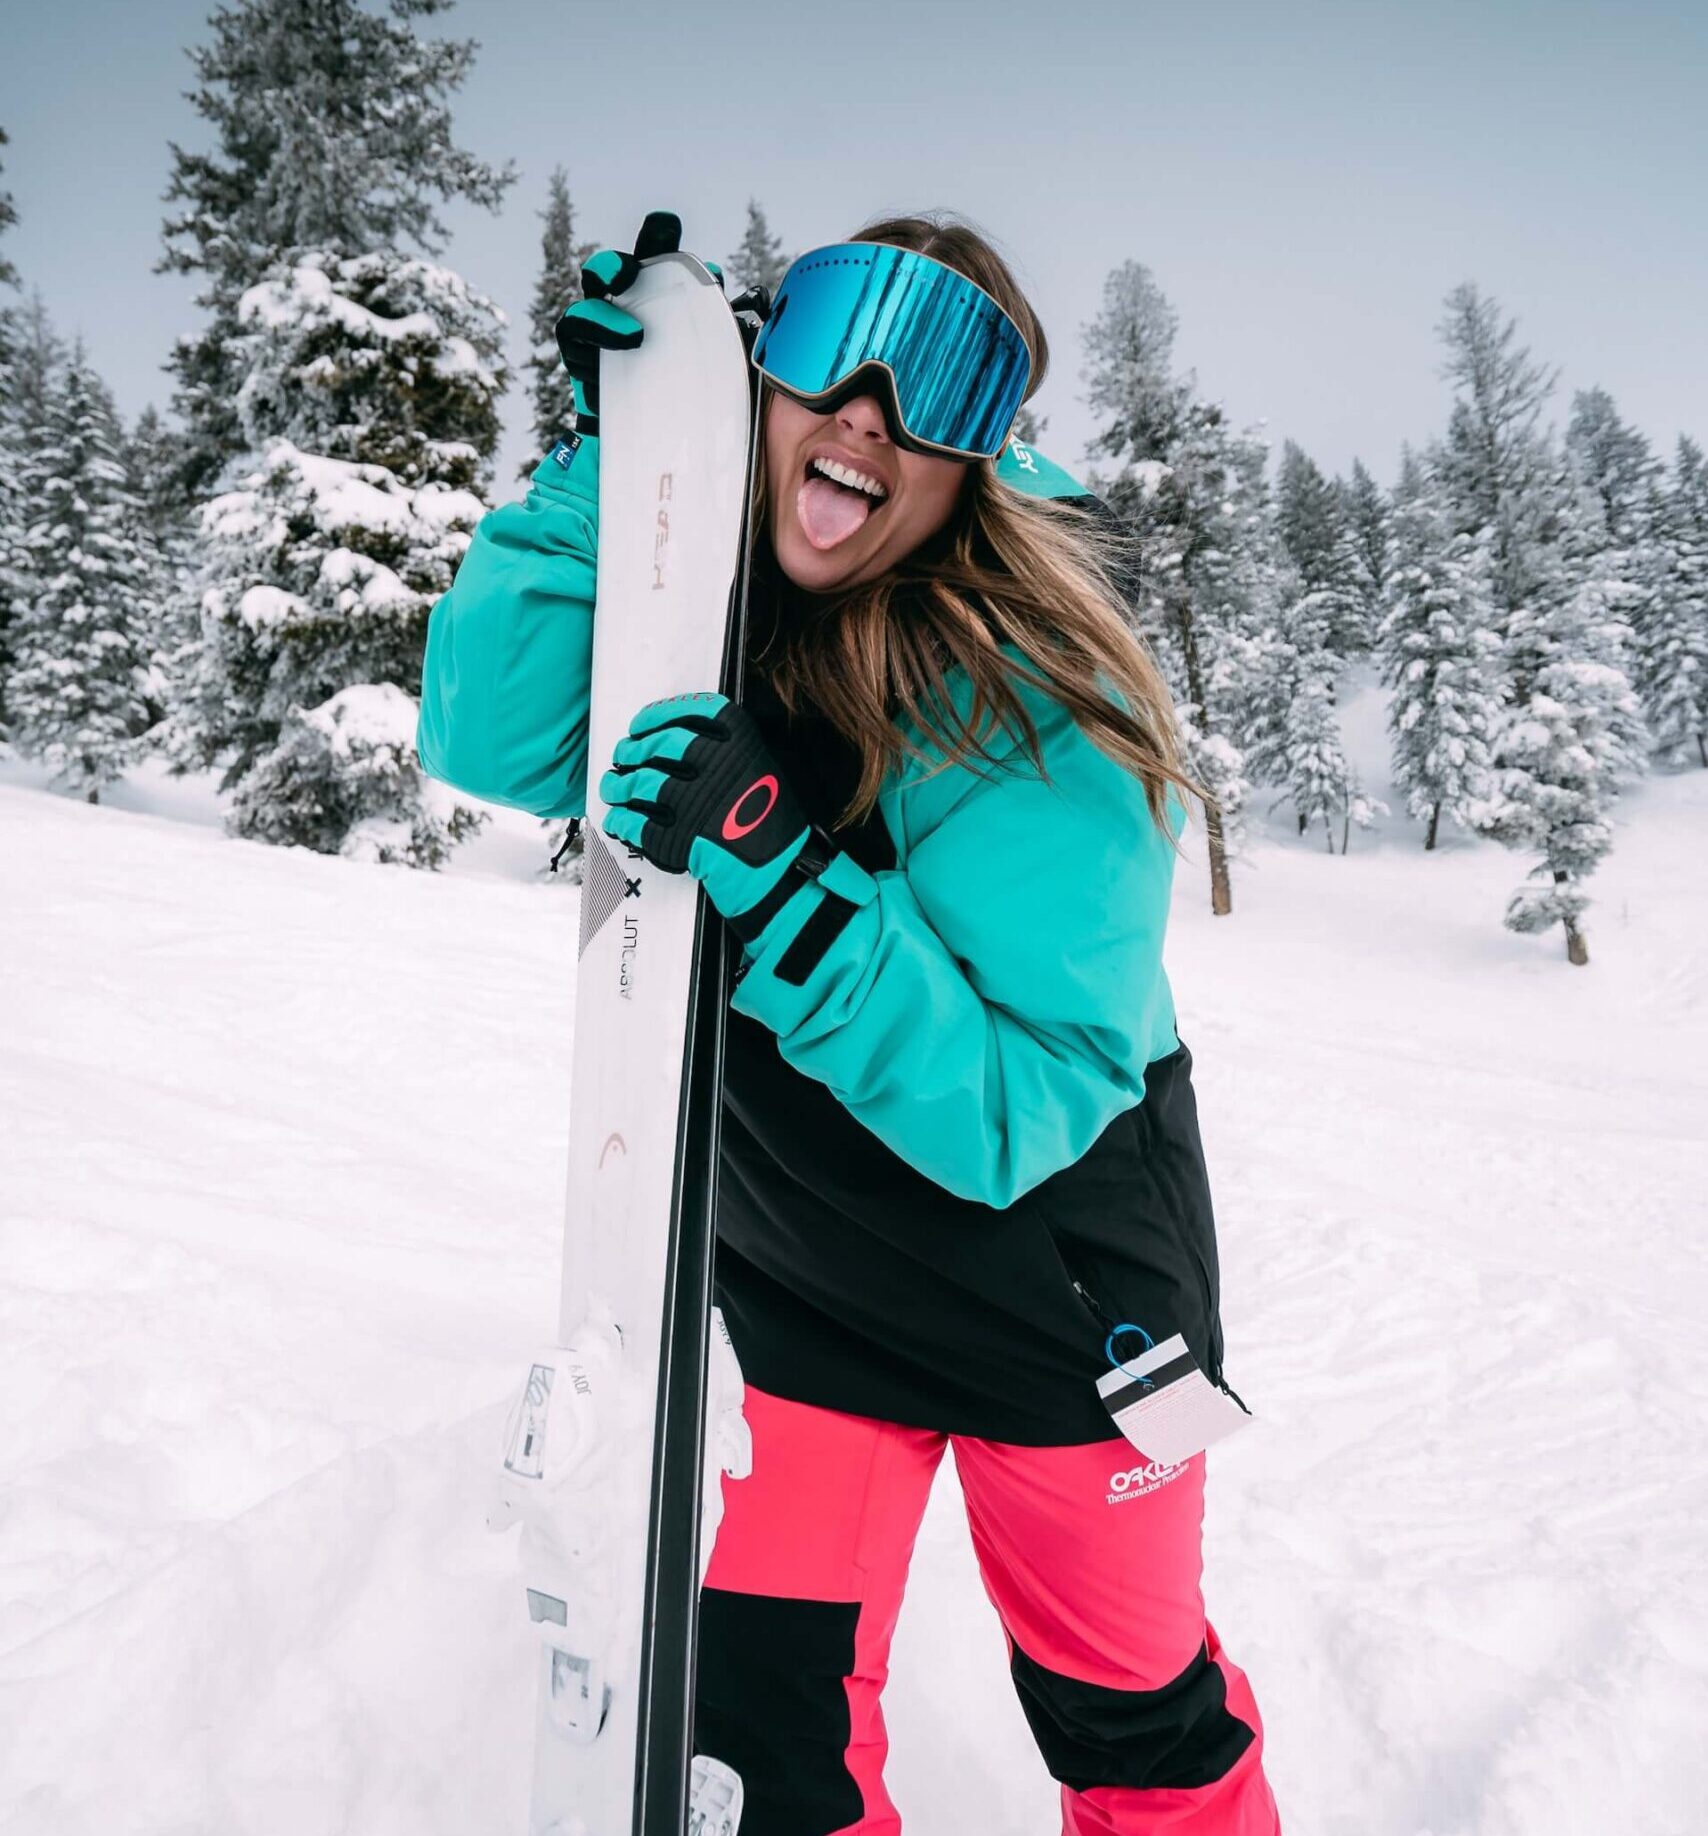 Bedste skijakke, skijakke test, dame skijakke, 2023, varm skijakke, billige skijakker, skaljakker ski, bedste skaljakke, dame skijakke, skijakke til dame, Revolution Race skijakke, sort skijakke, blå skijakke, bedst i test, varm skijakke